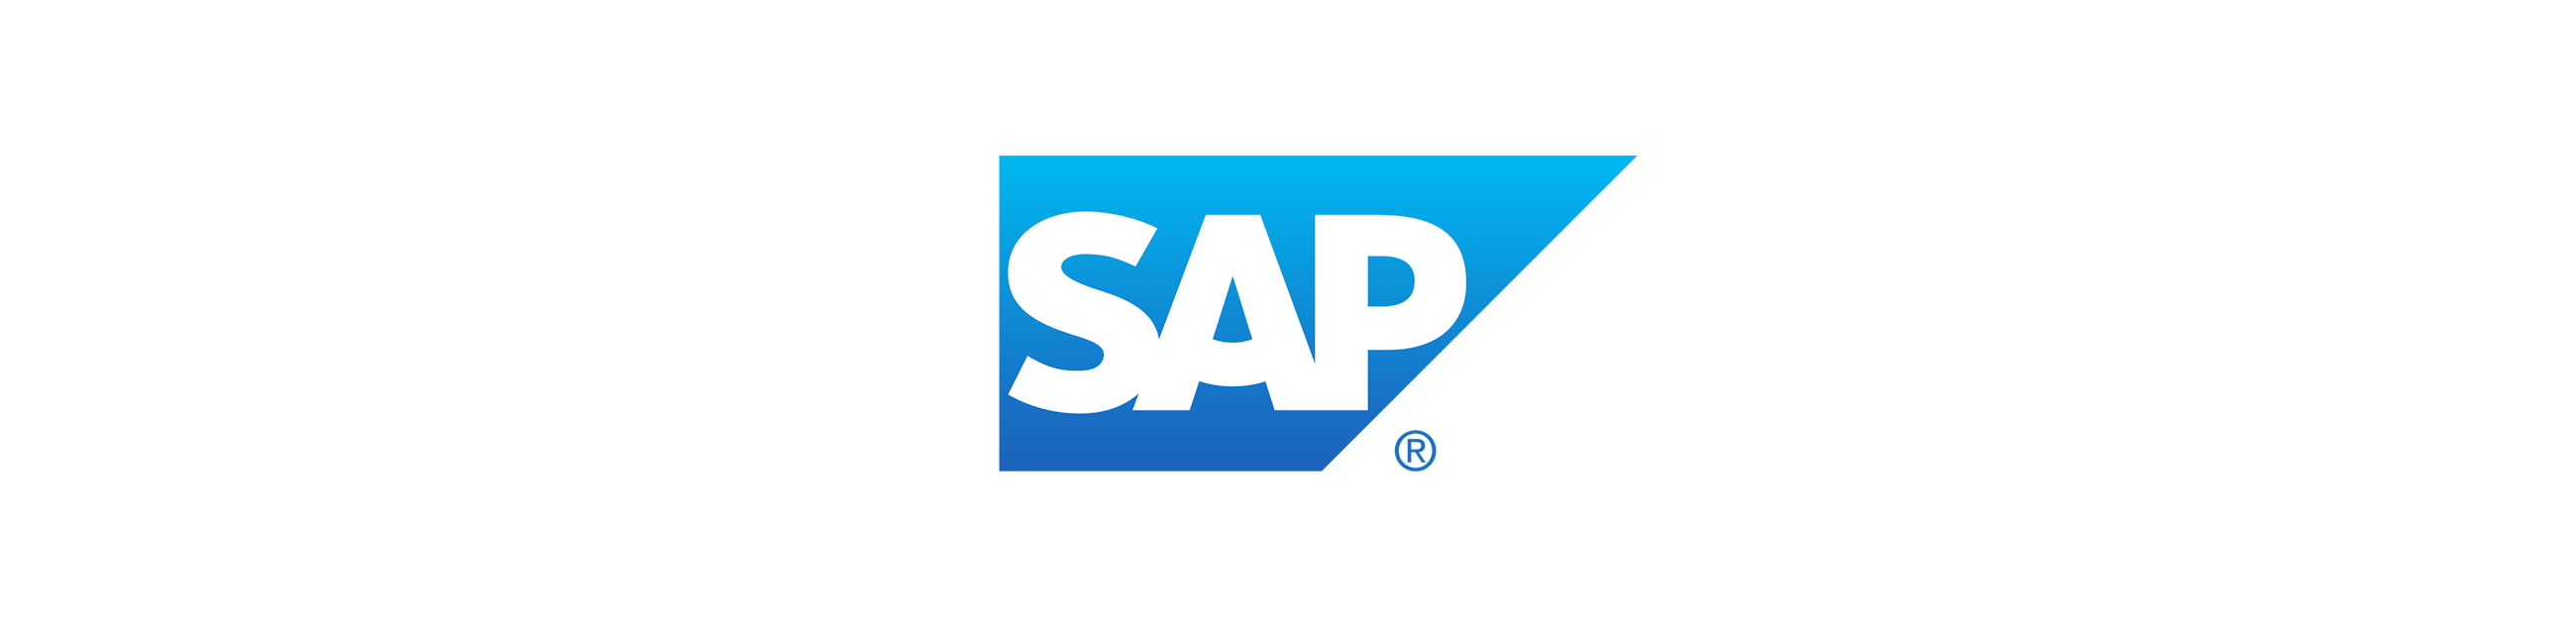 Small SAP logo